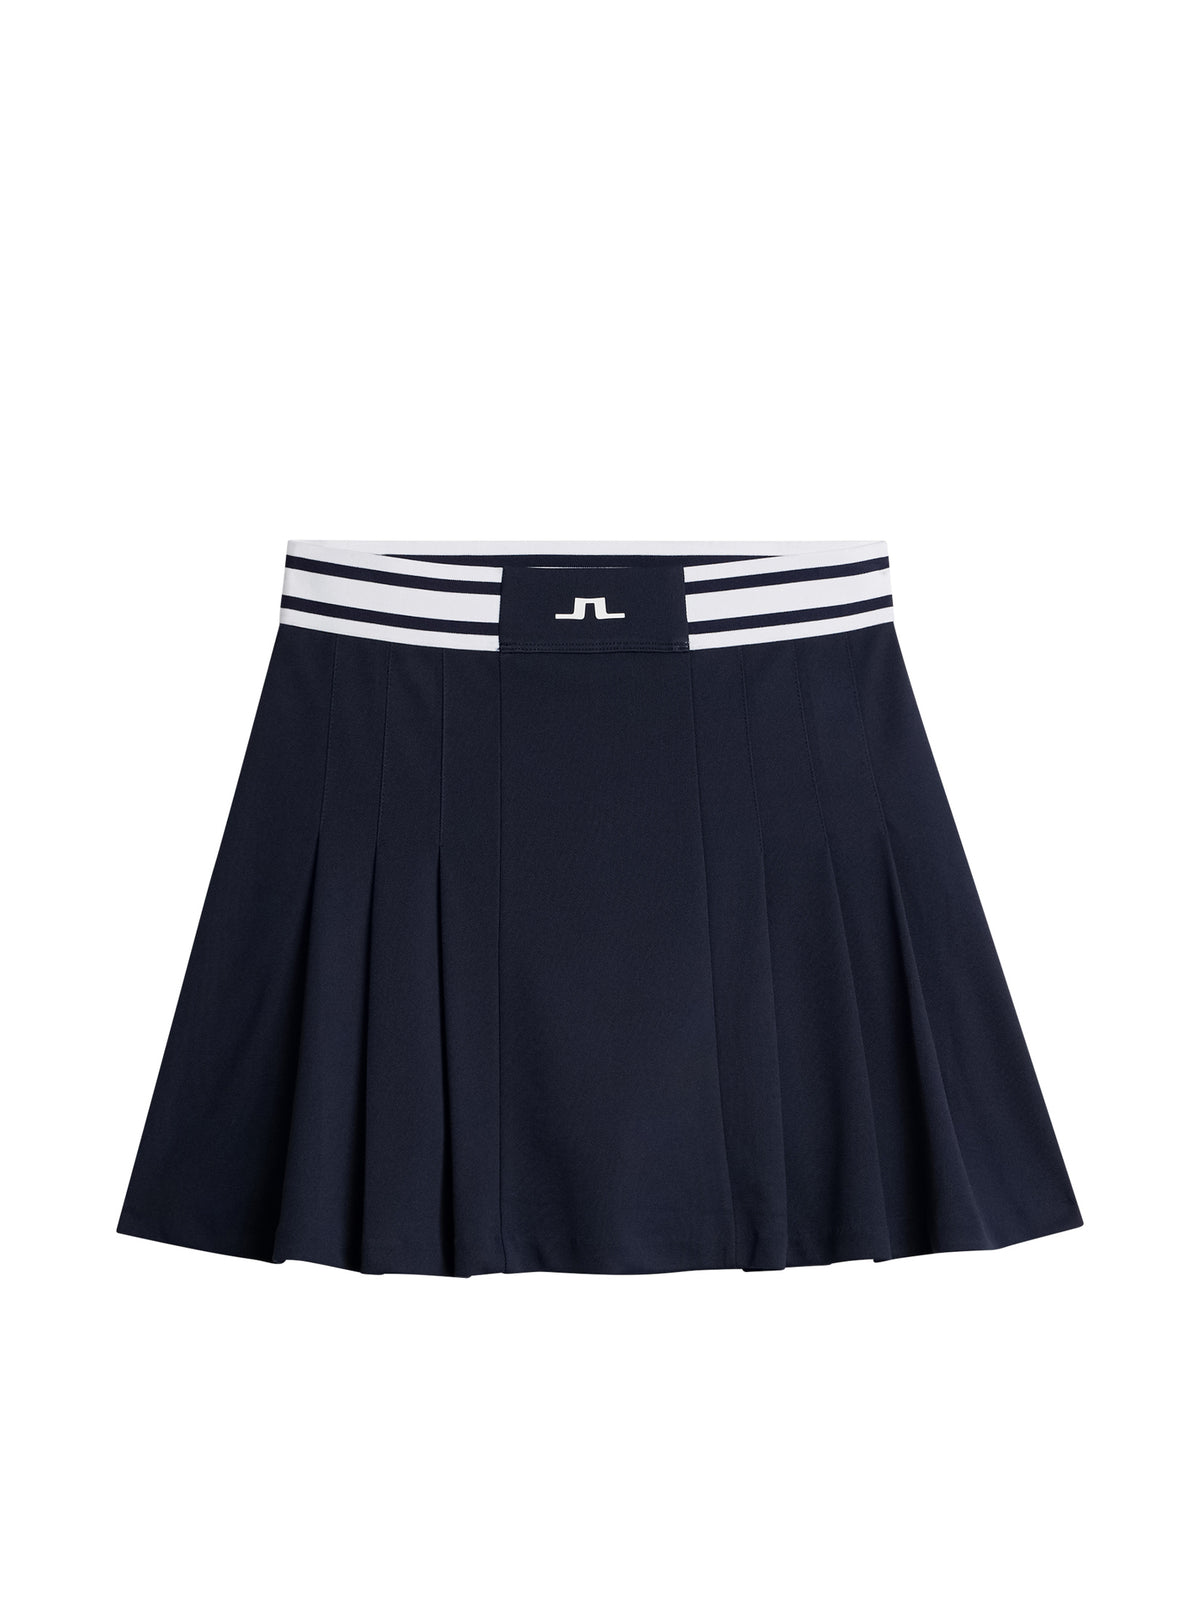 Harlow Skirt / JL Navy